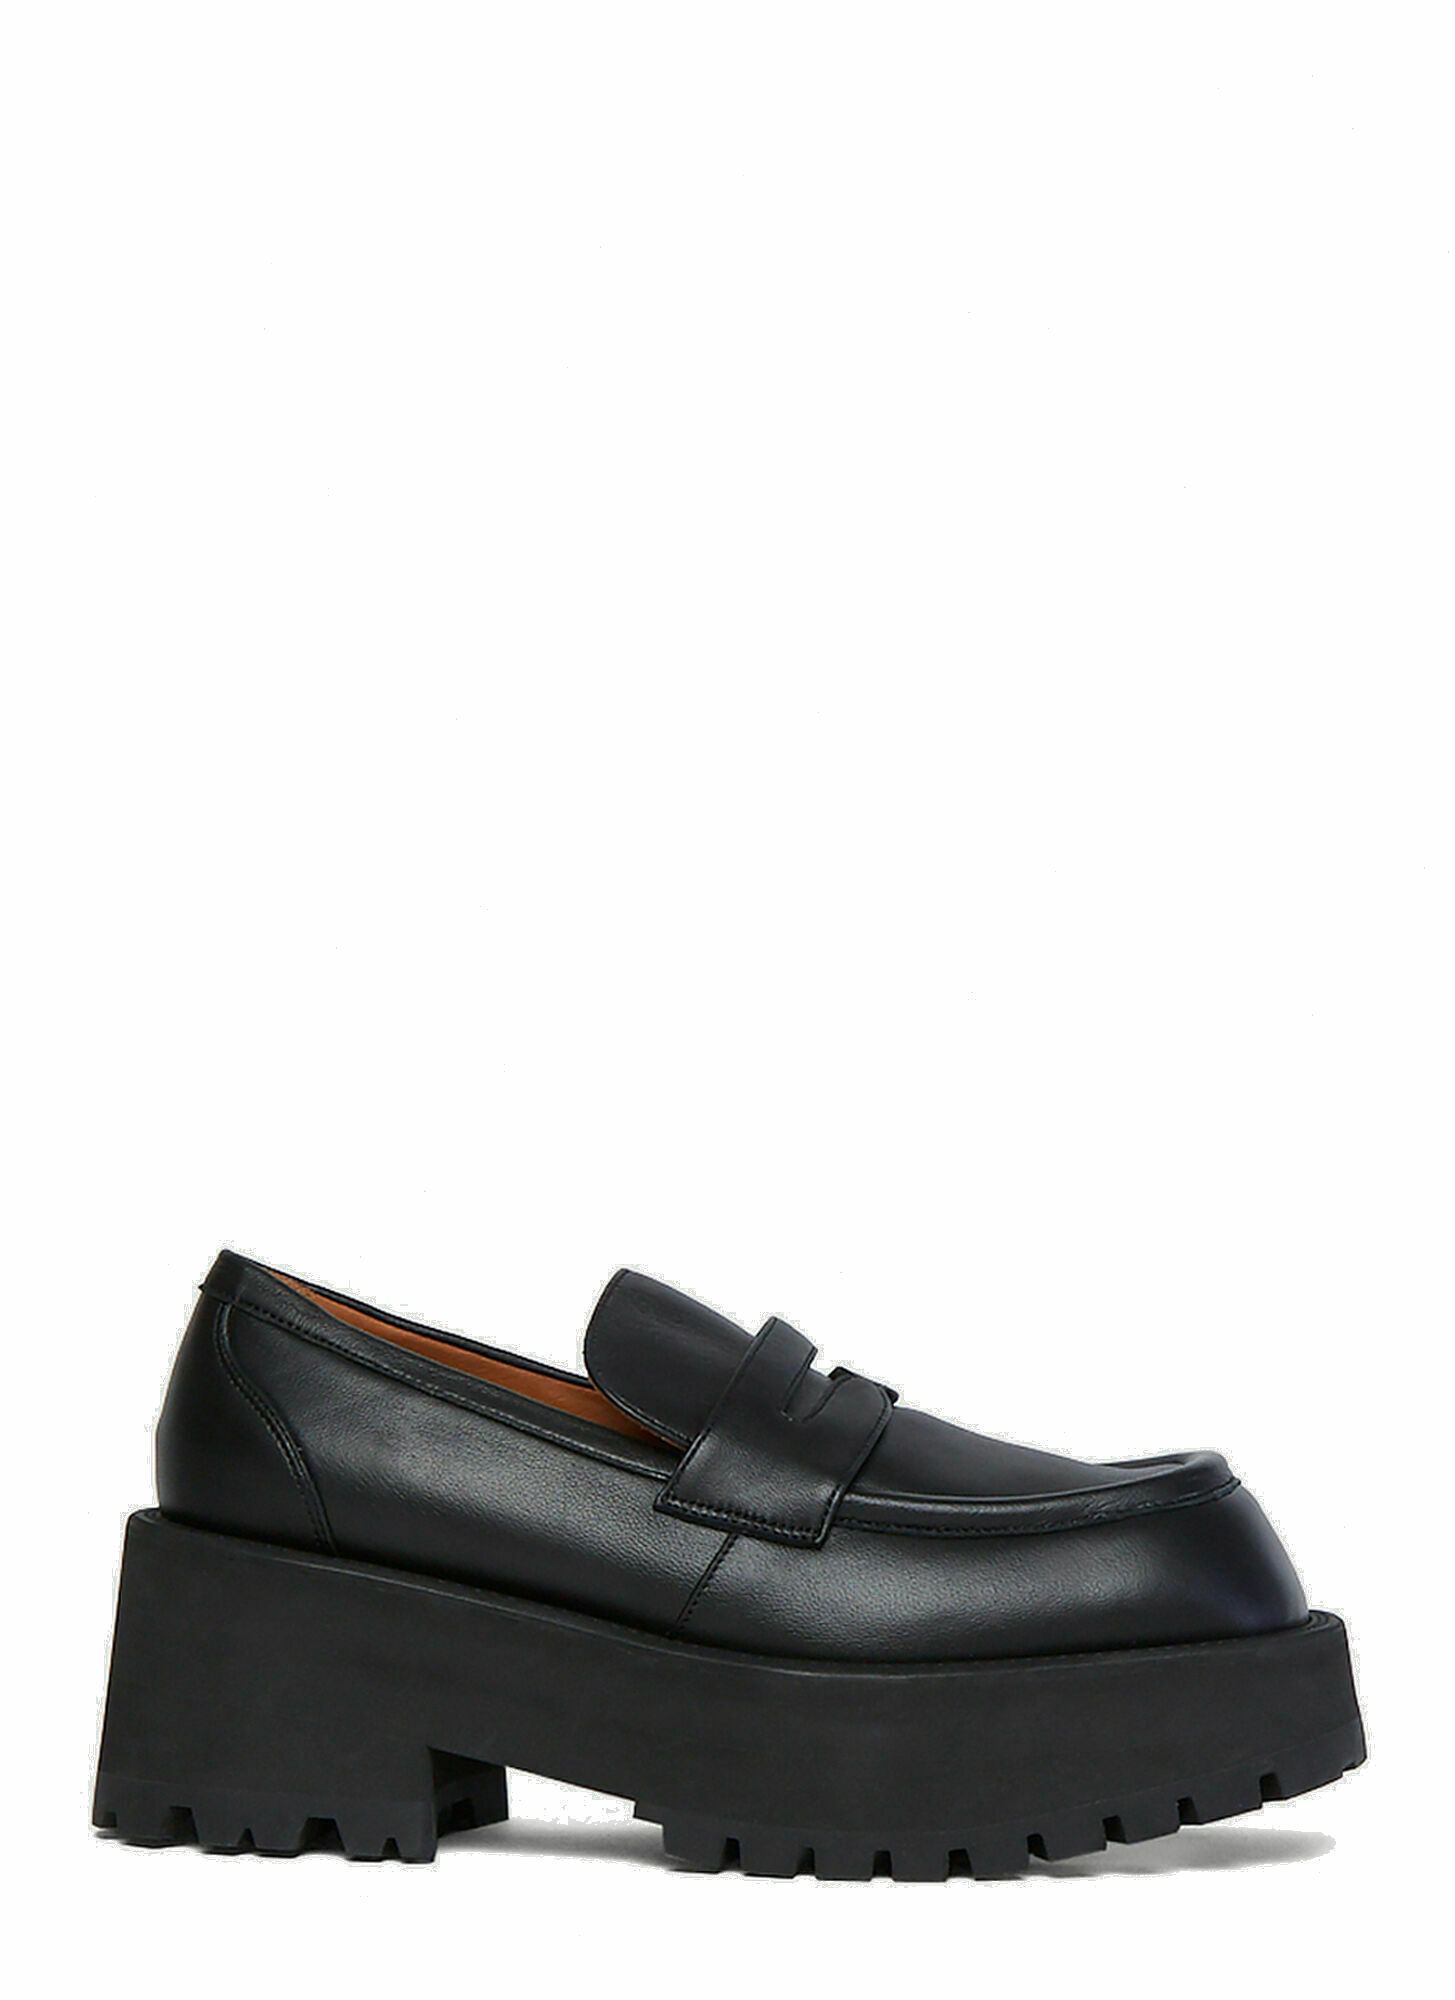 Marni - Platform Loafers in Black Marni